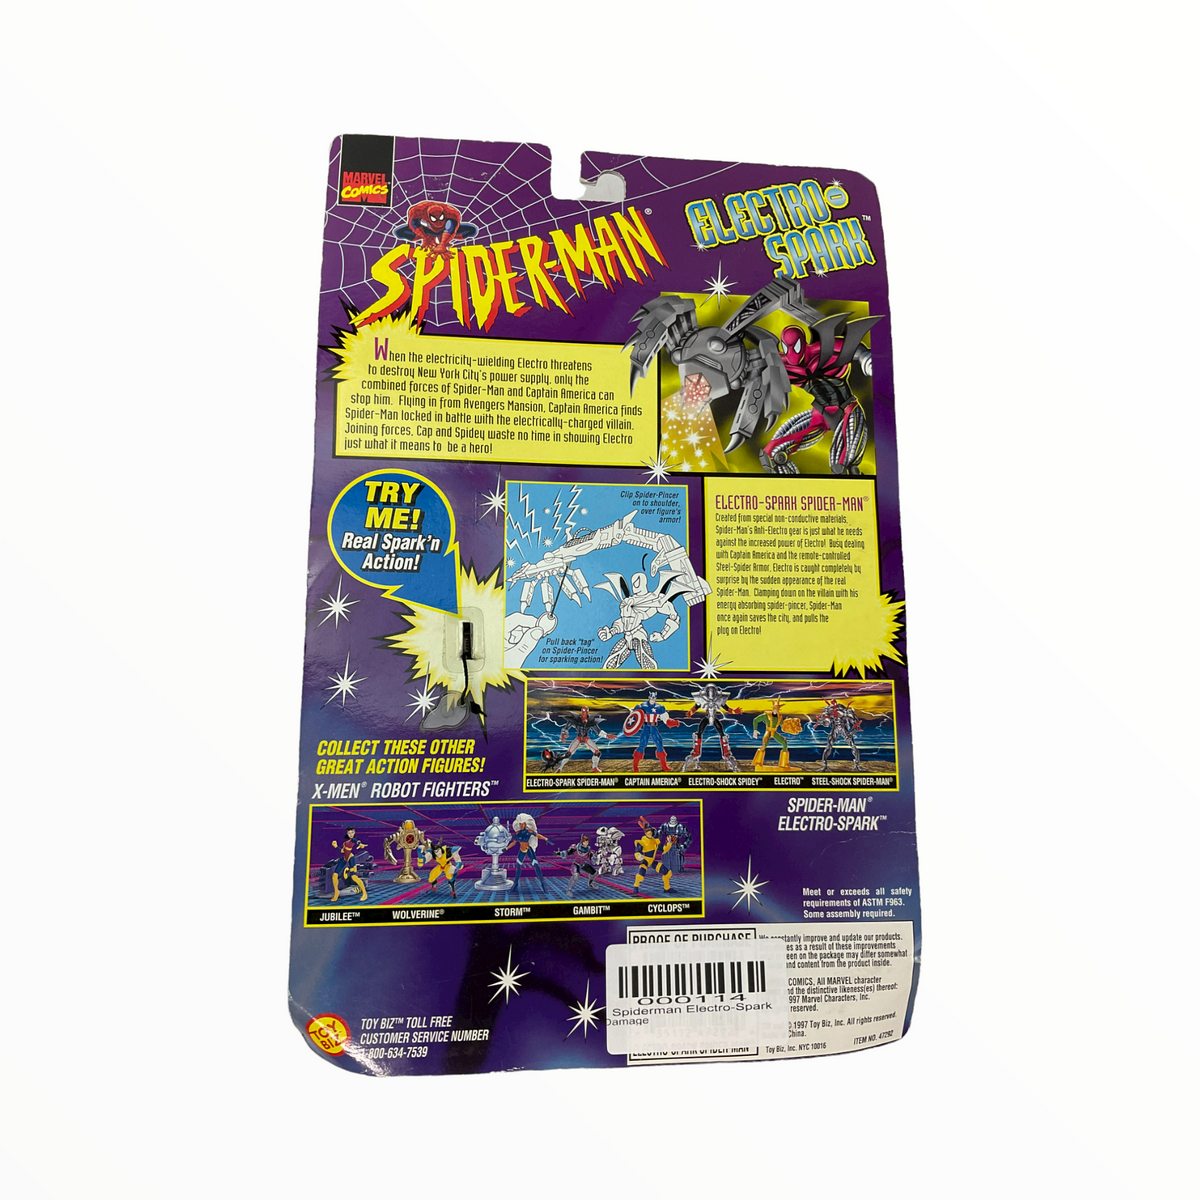 Spiderman Electro-Spark Figure Toy